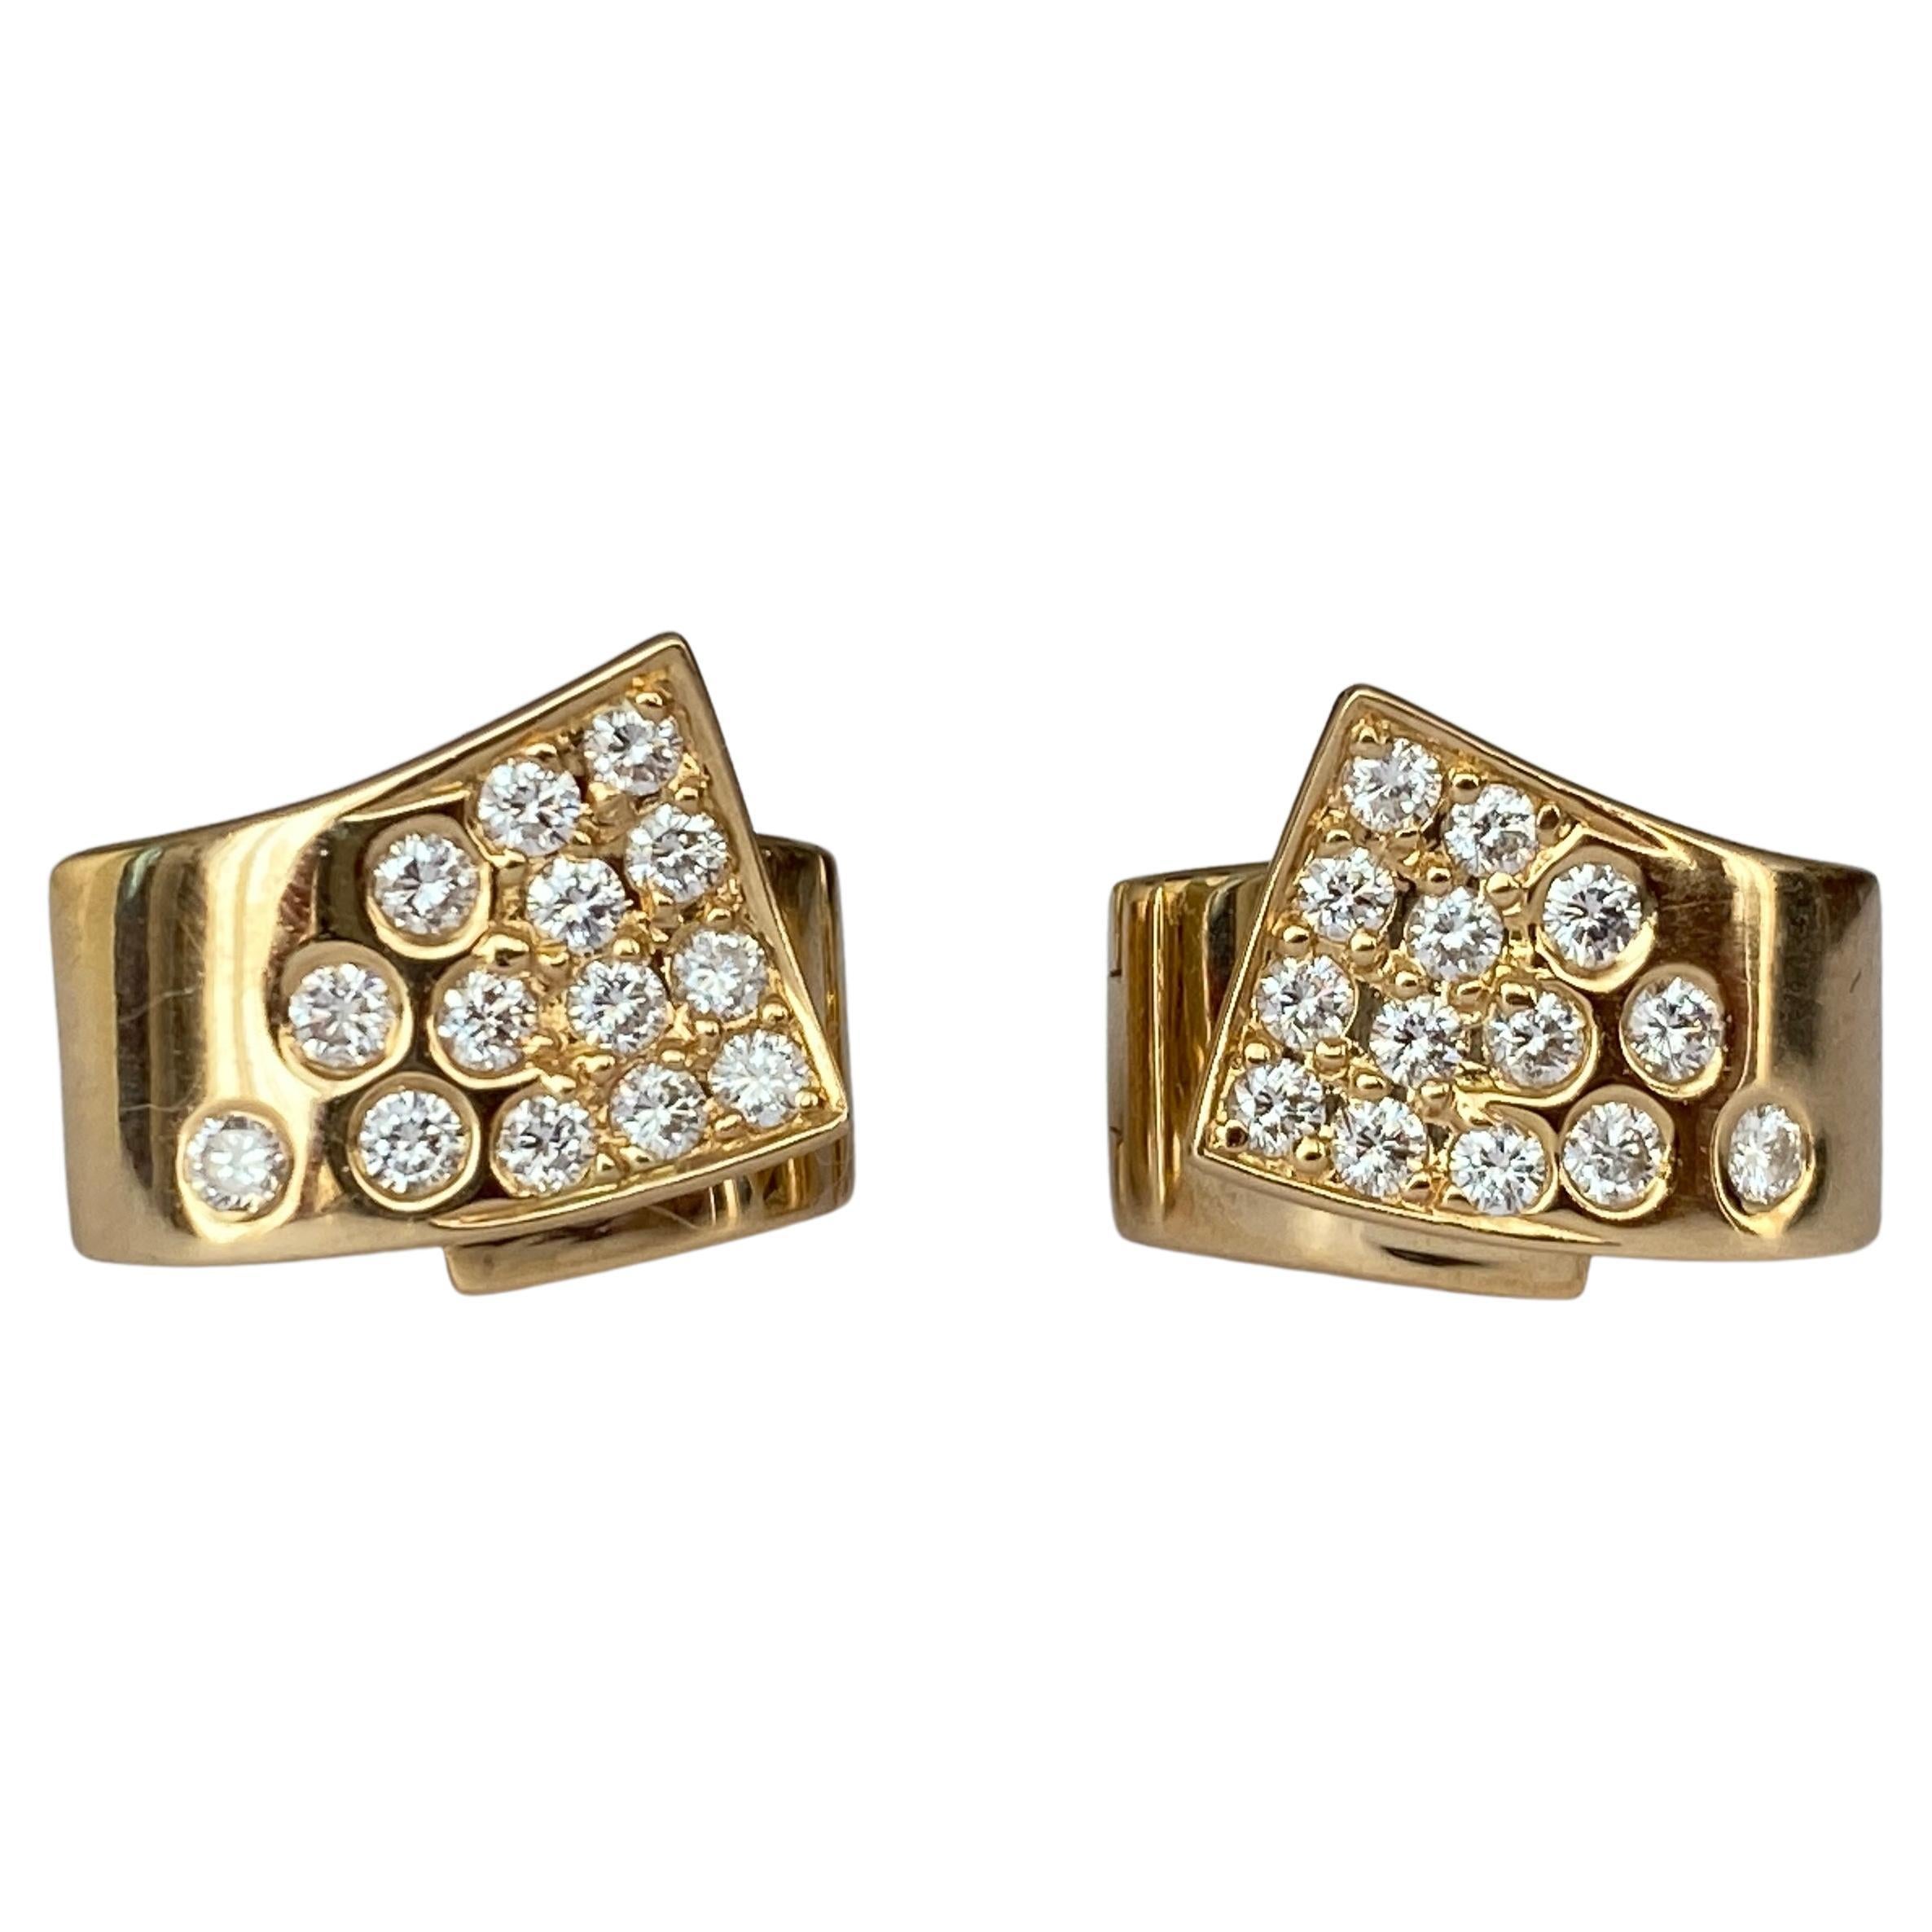 French Designer Louis Feraud Diamond 18k Gold Diamond Earrings